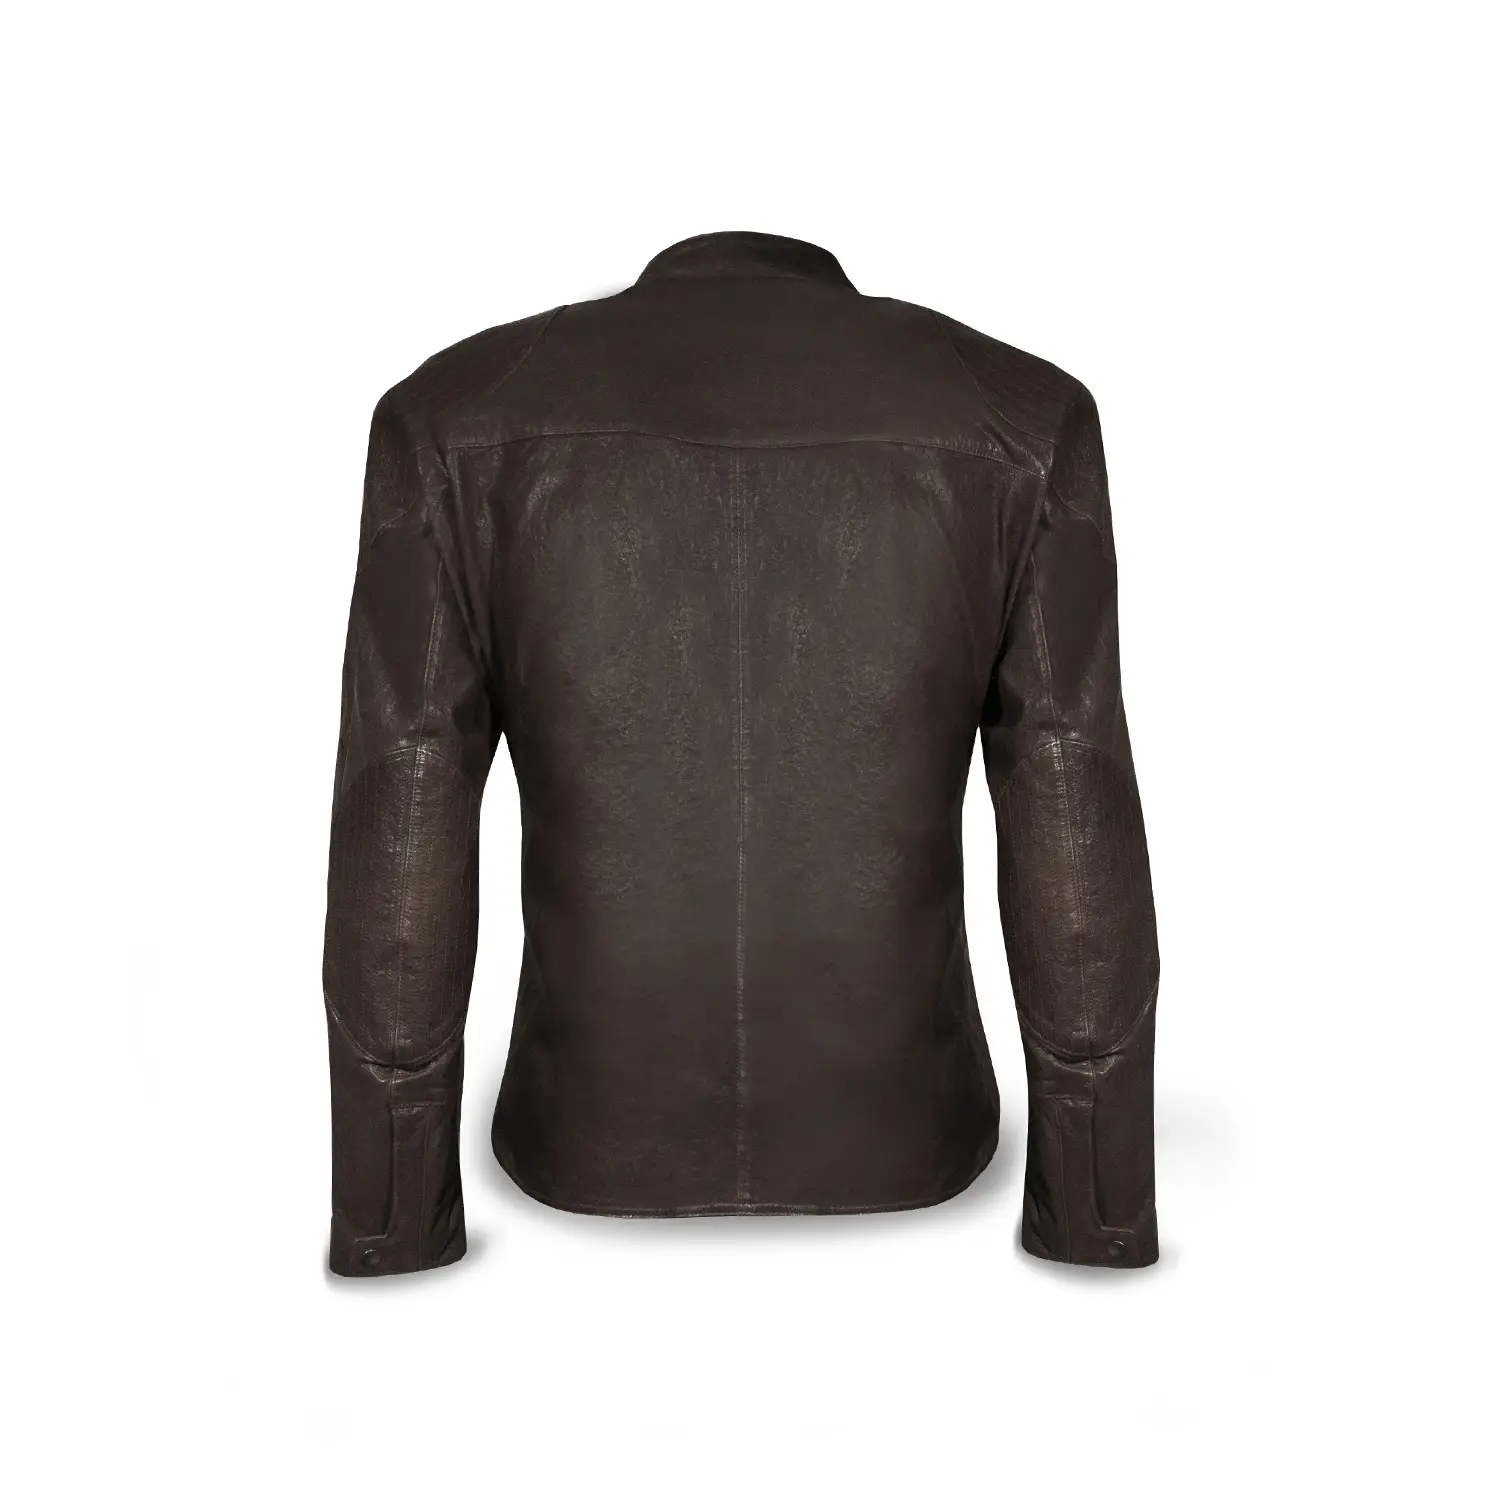 dmd.eu - SOLO RIDER BROWN (NICHT GENEHMIGT) DMD – Solo Rider Brown Leather (non omologata) – back